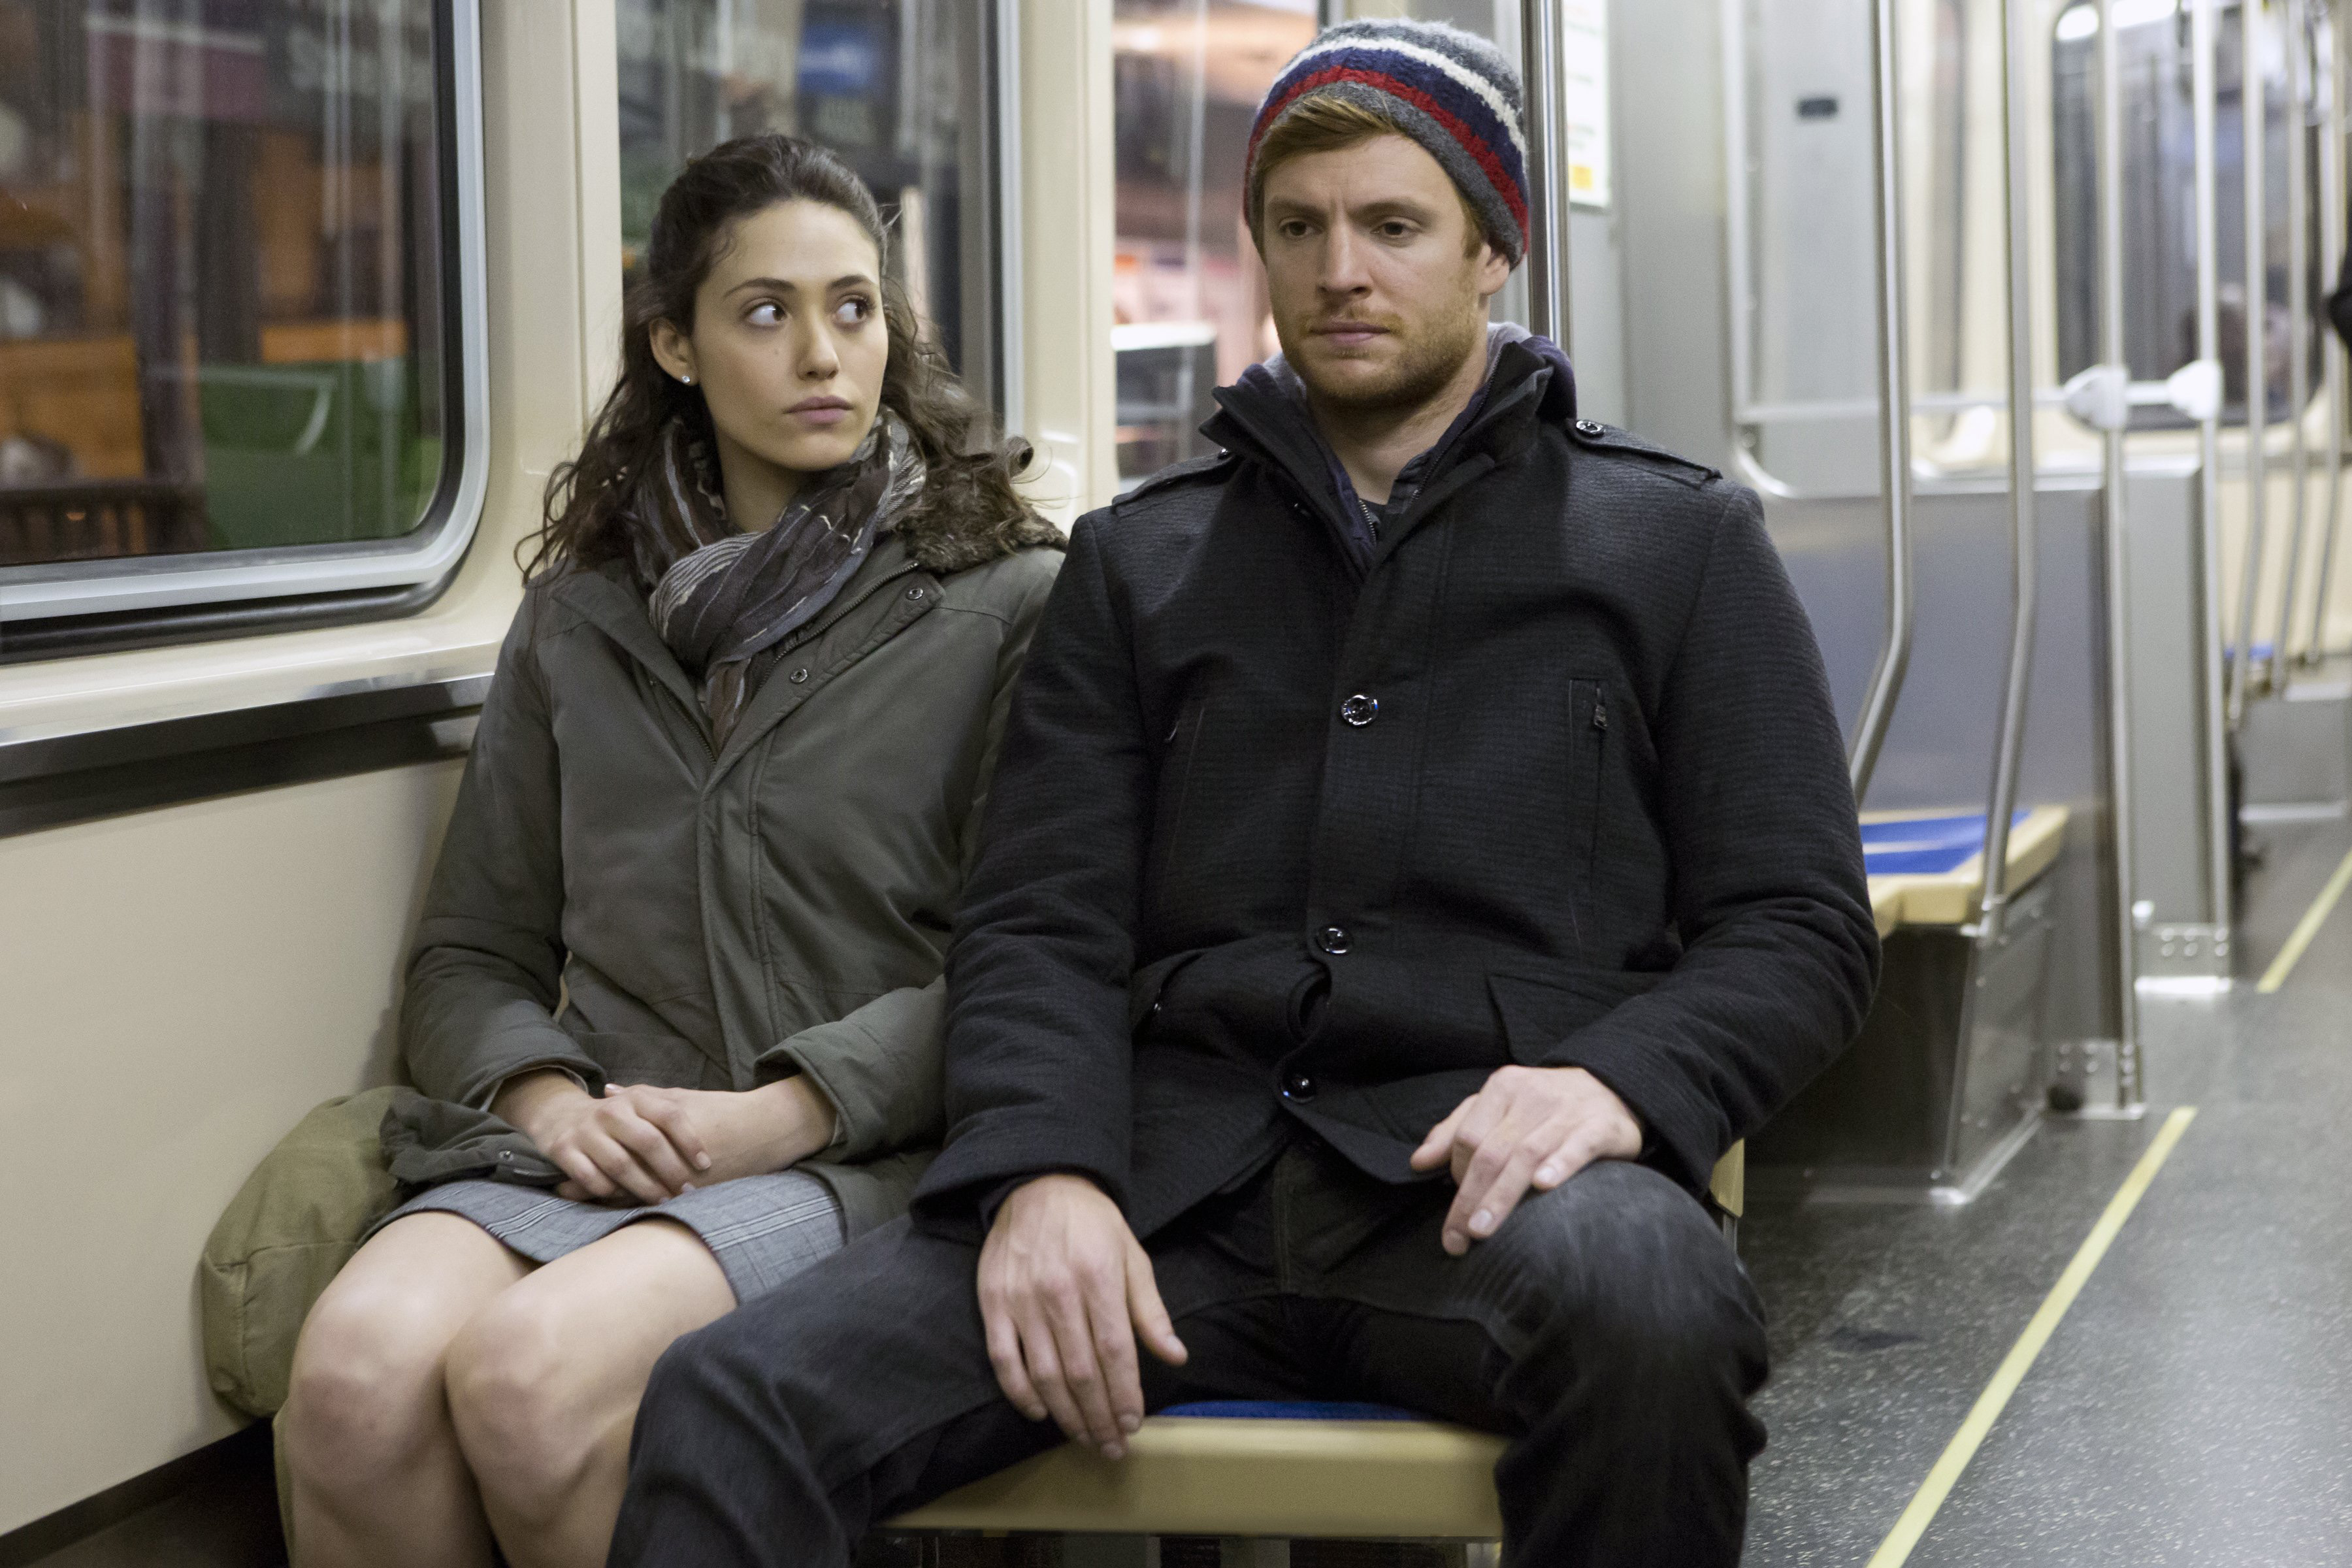 Emmy Rossum and Nick Gehlfuss sitting on a train